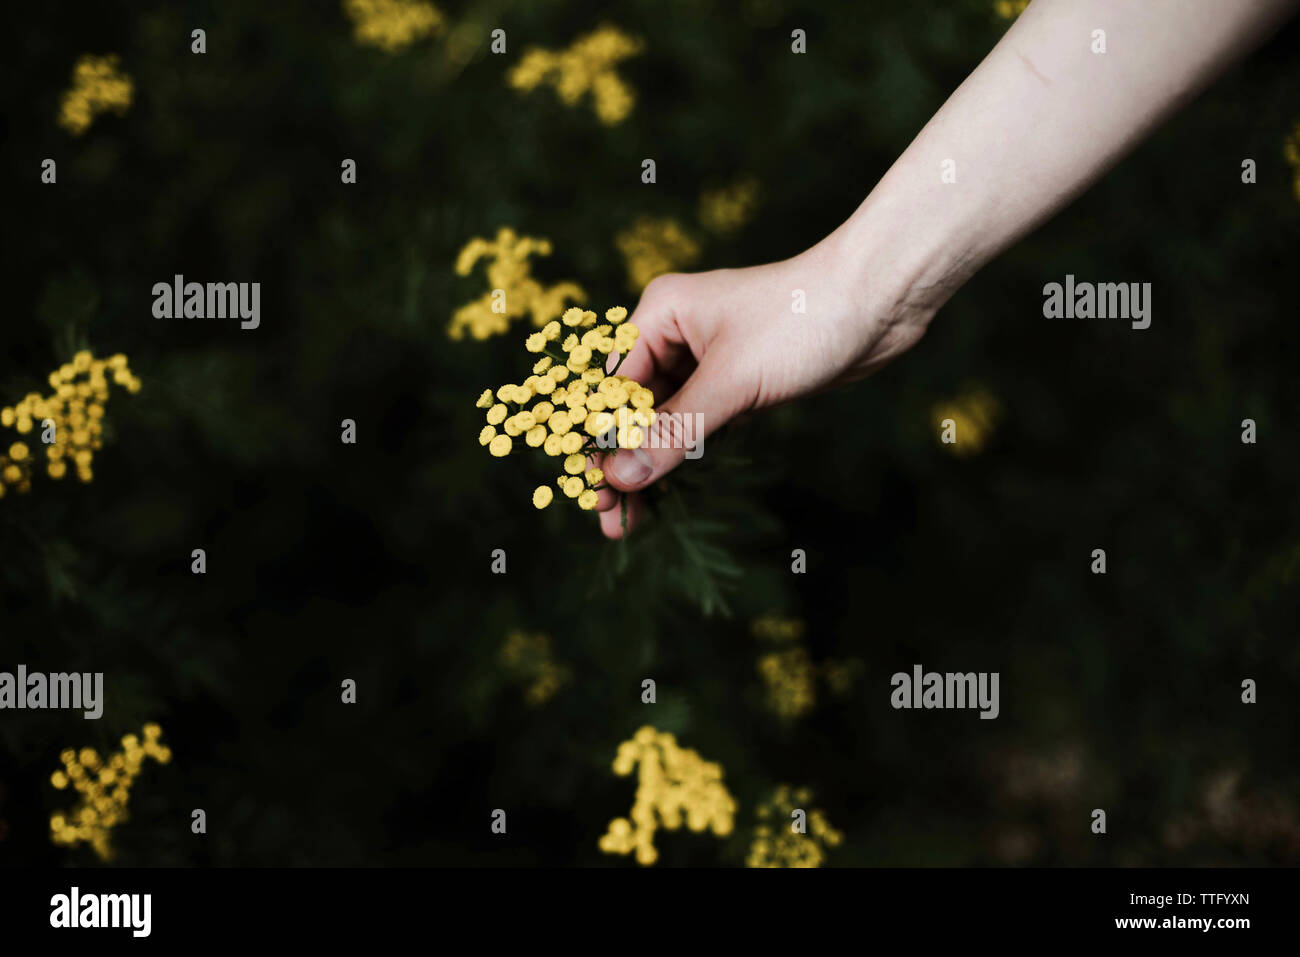 Woman holding wild yellow flowers. Stock Photo